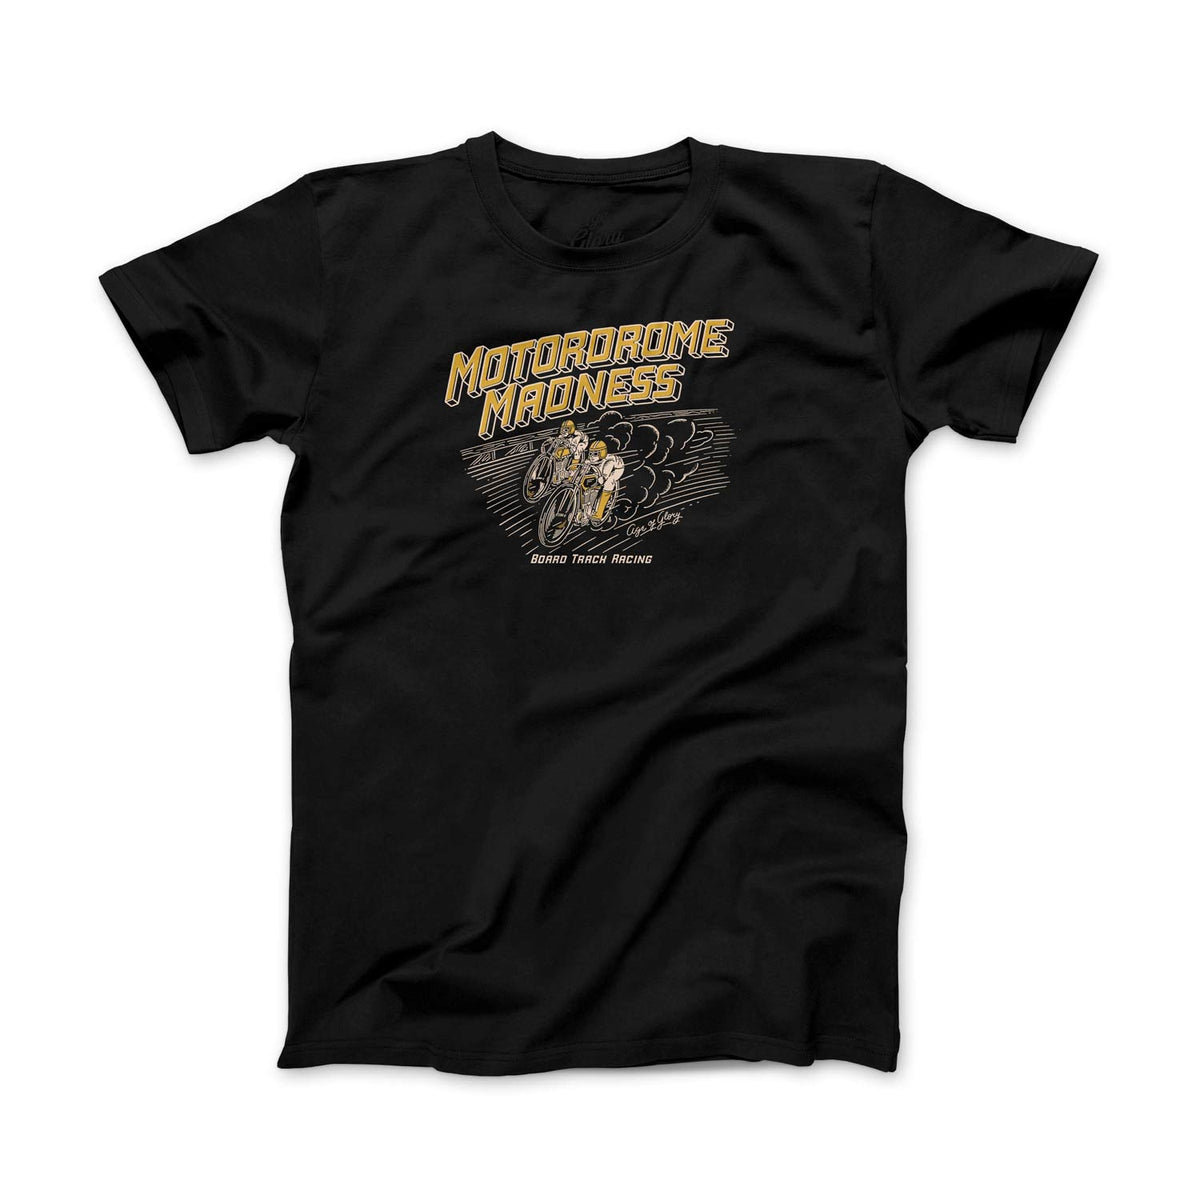 Age of Glory Motordrome T-Shirt